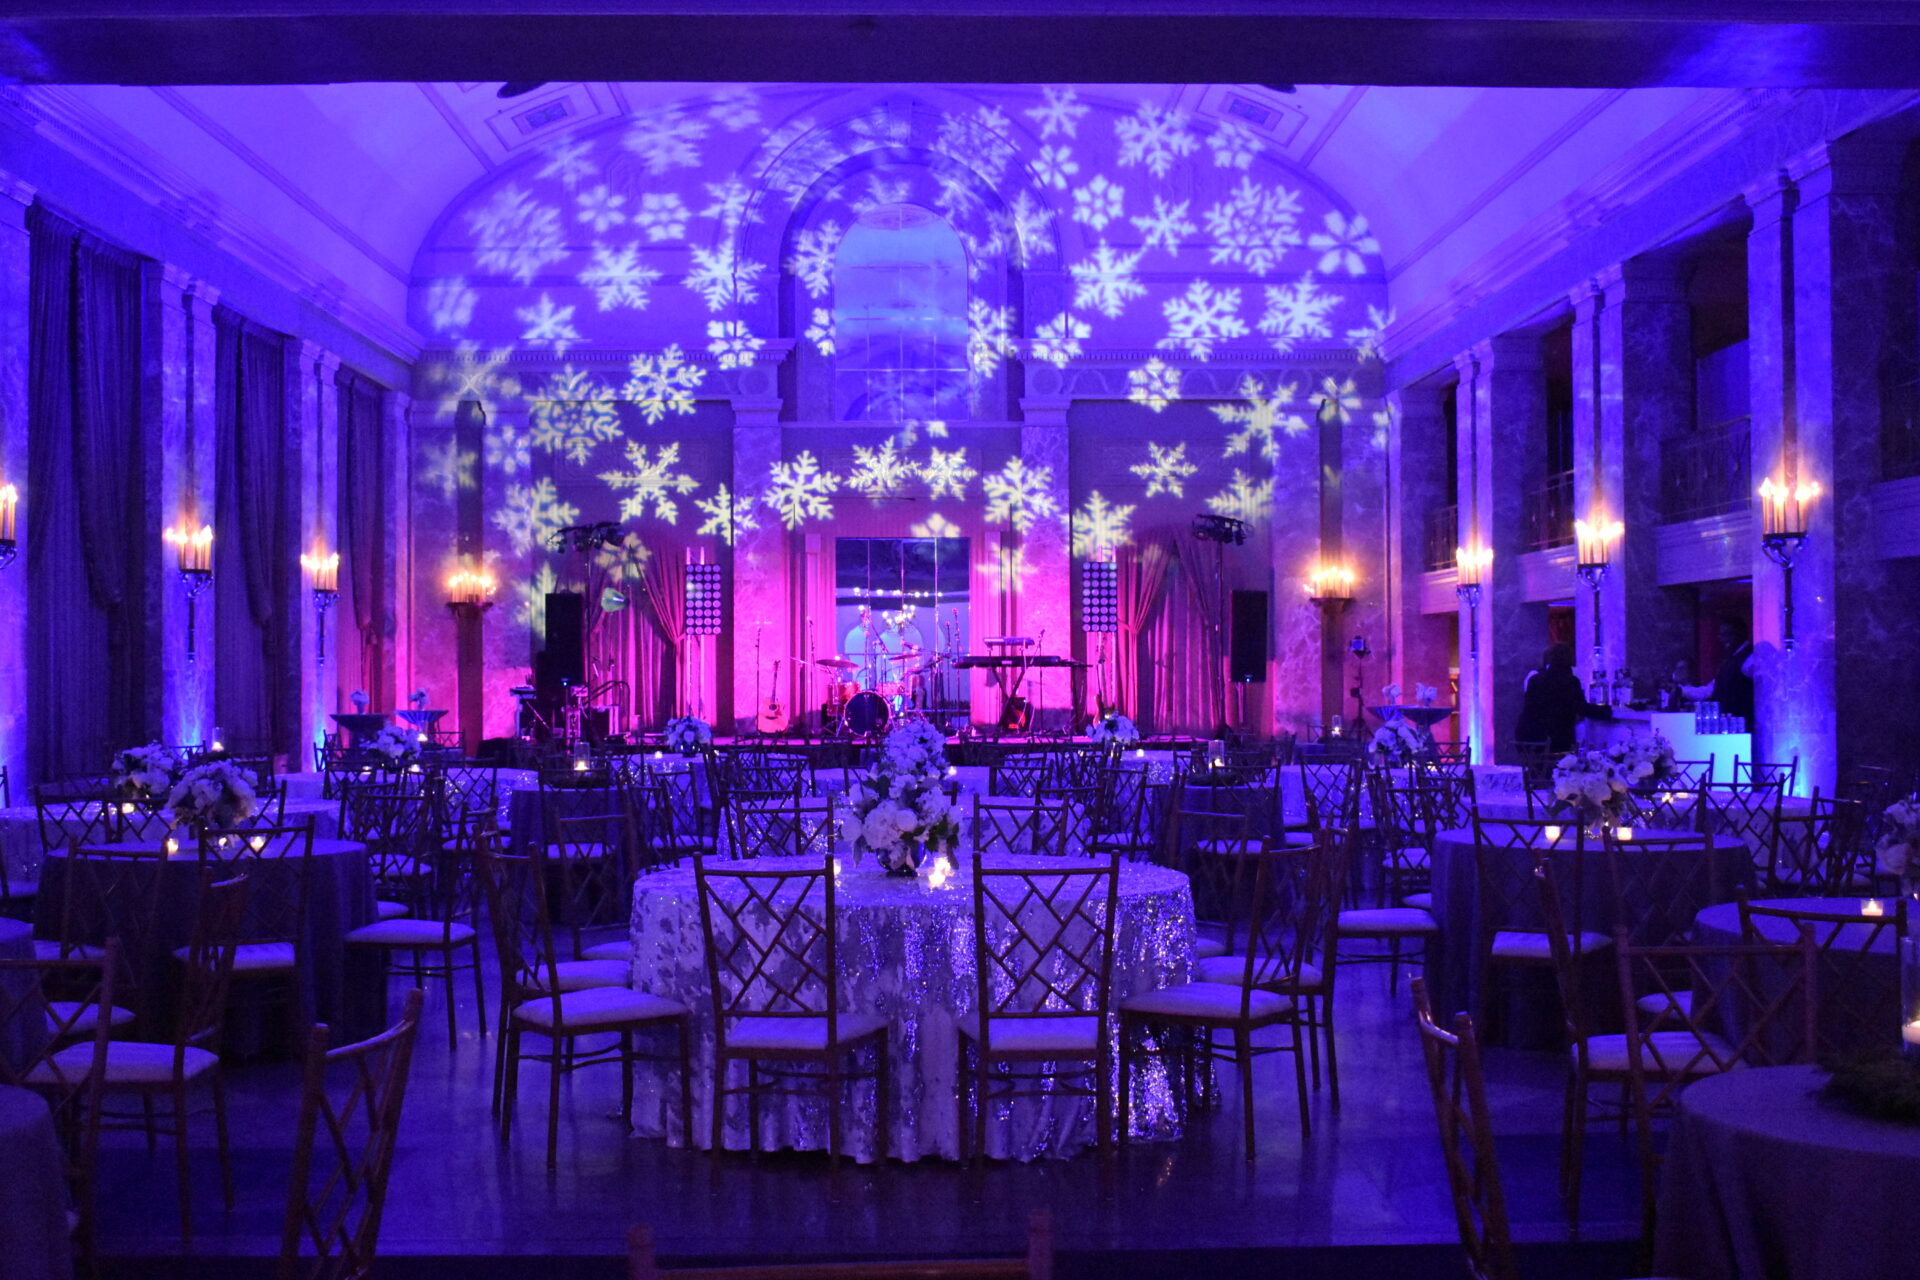 Snowflake blue lighting in the ballroom